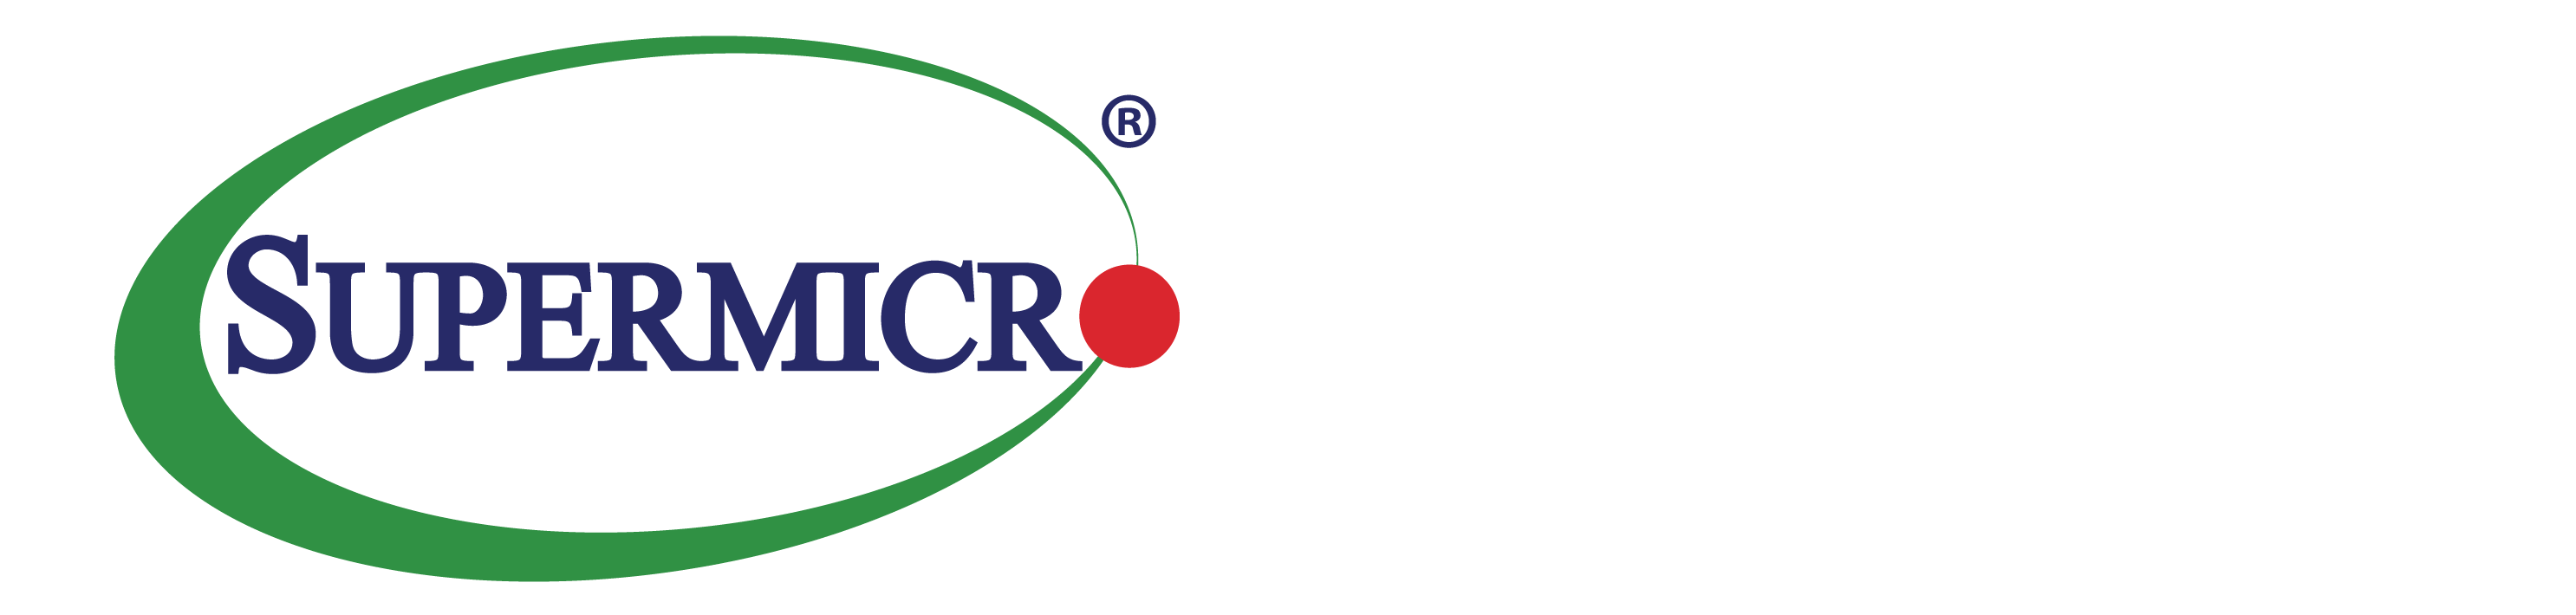 Supermicro & AMD Logo